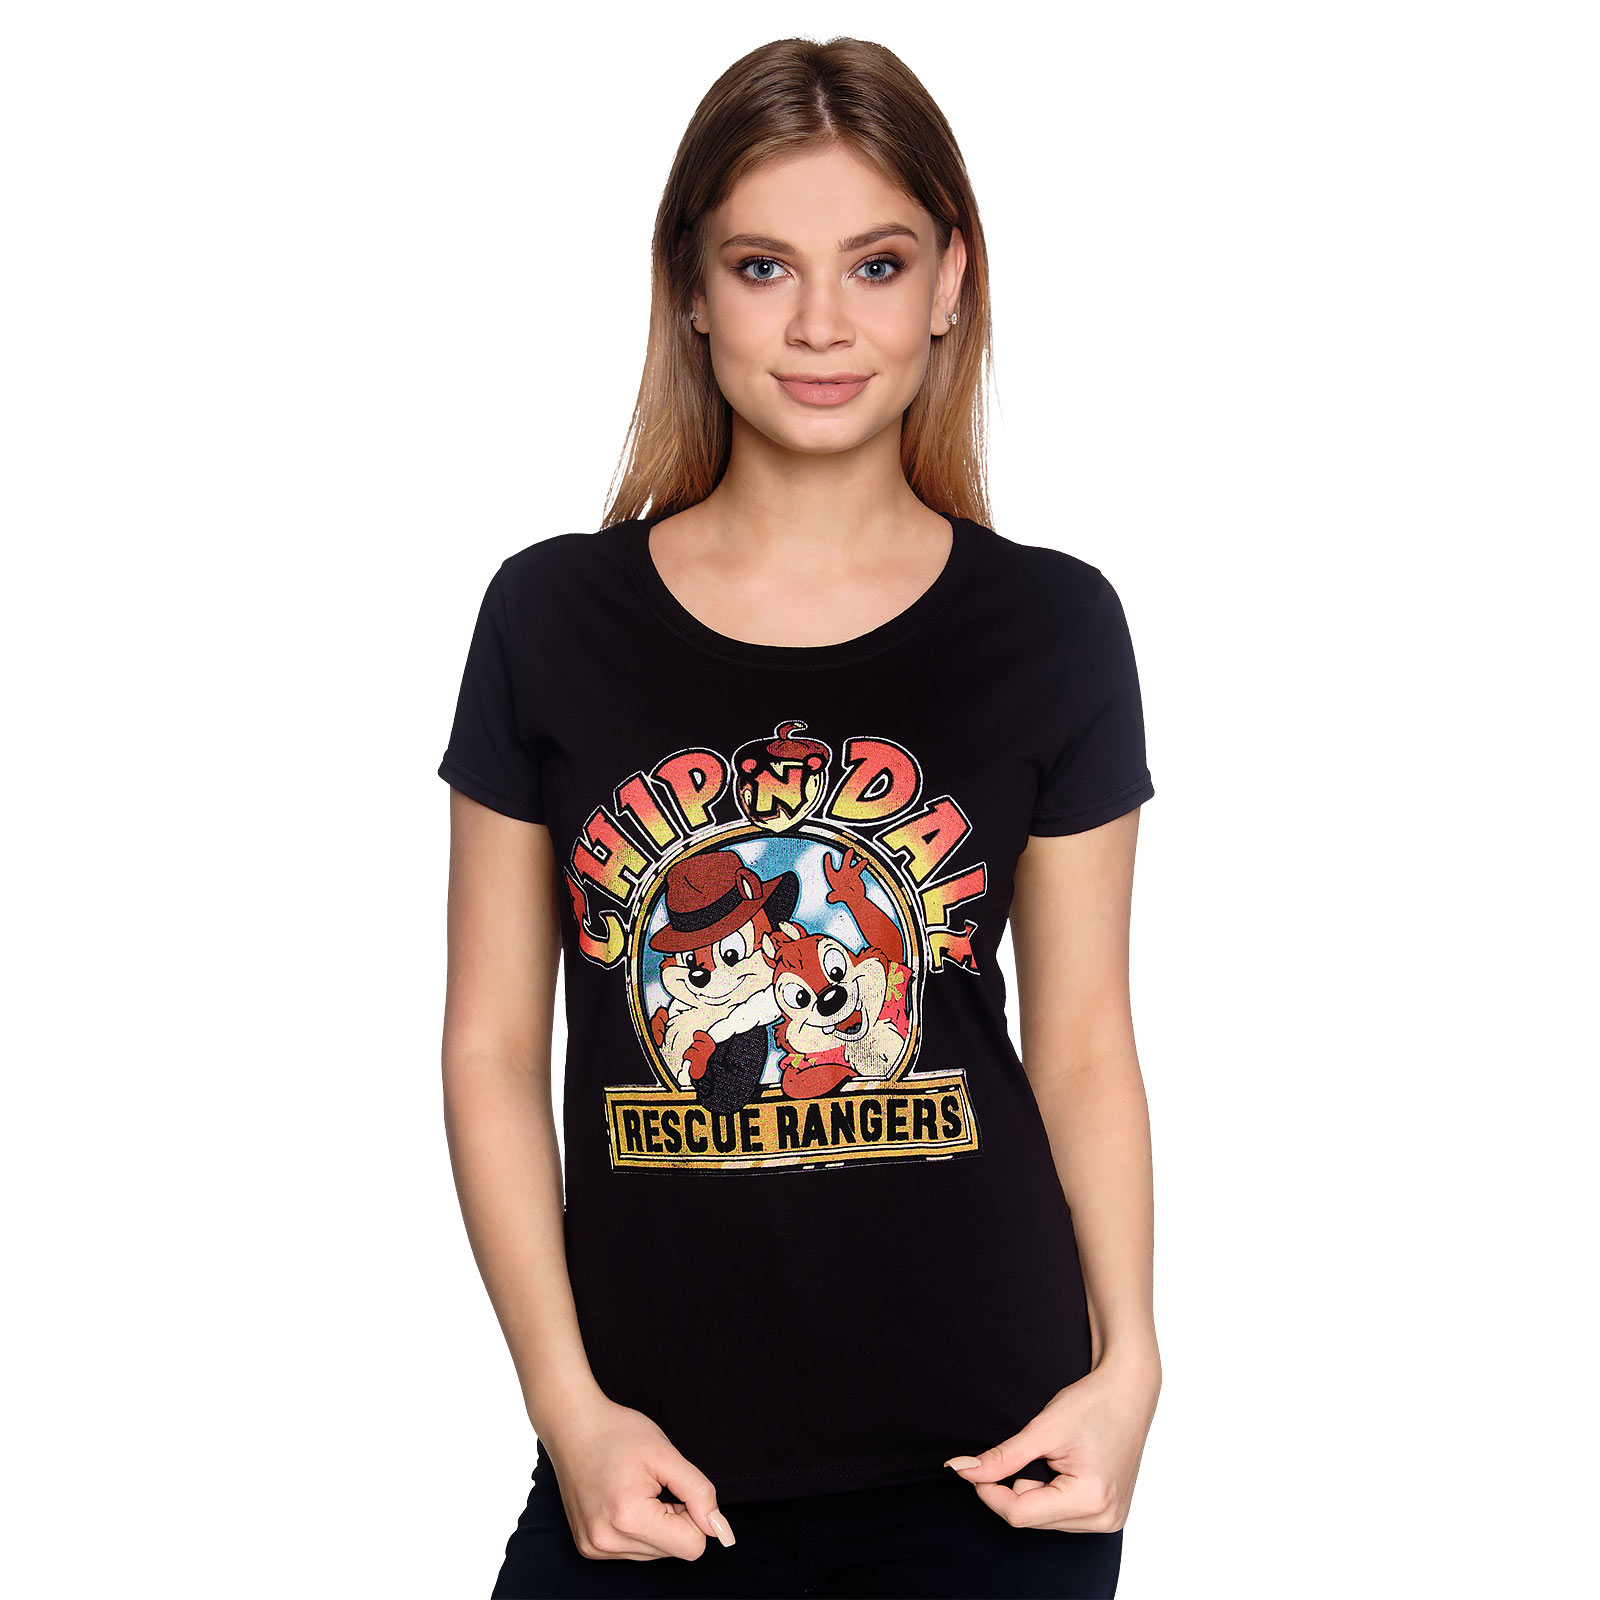 Chip und Chap - Rescue Rangers T-Shirt Damen Loose Fit schwarz